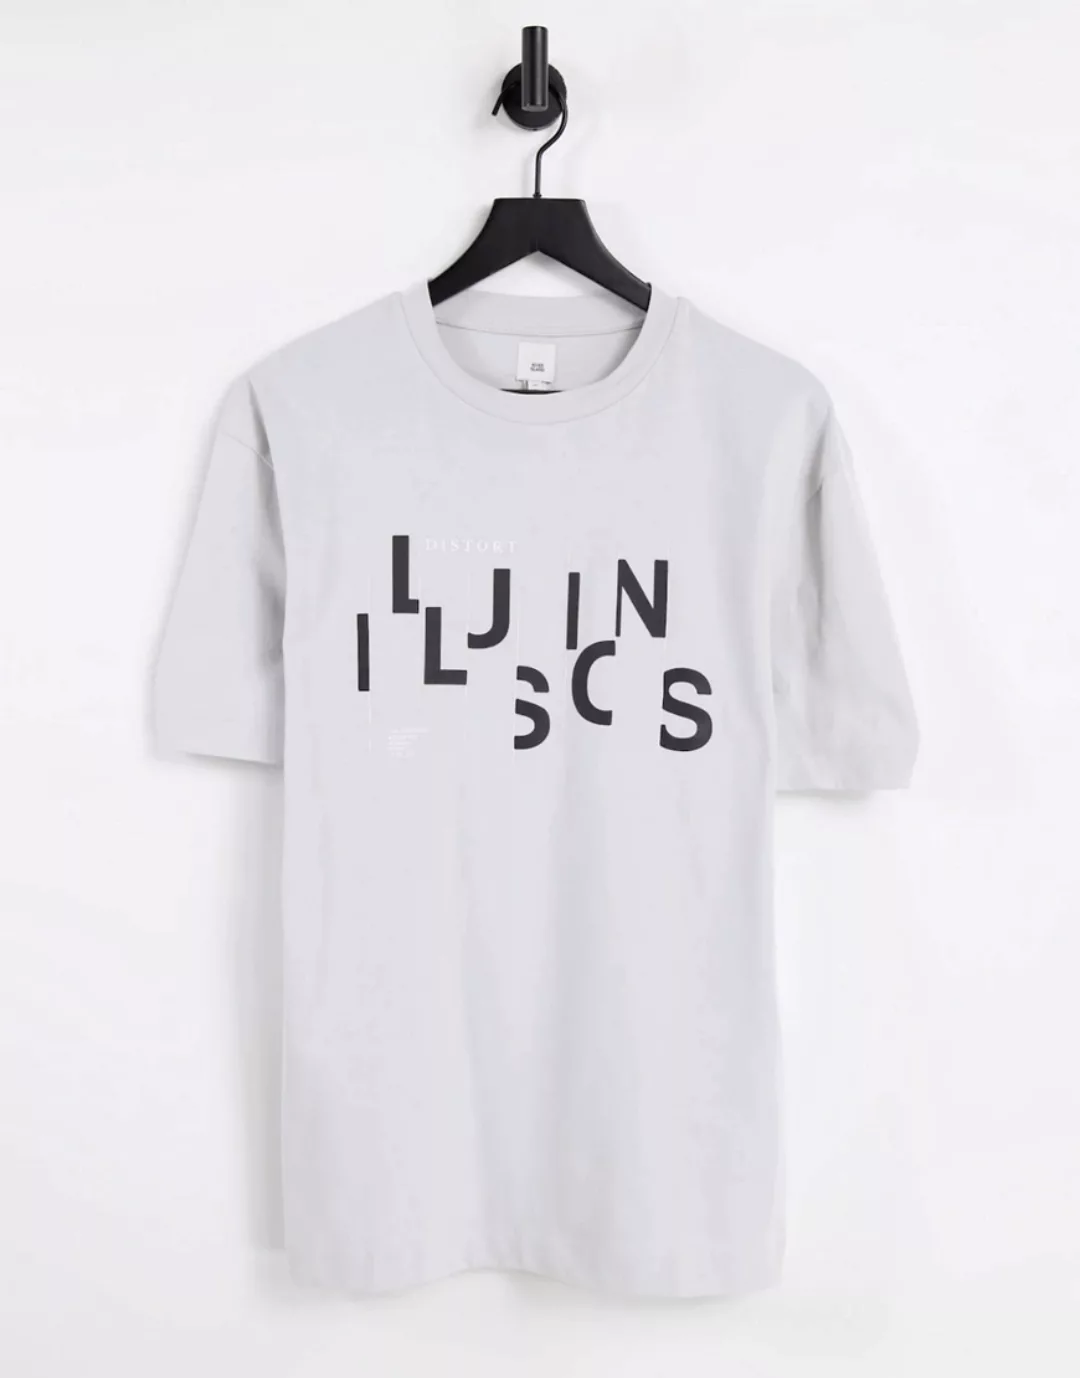 River Island ‑ Illusions ‑ Kastiges T-Shirt in Grau günstig online kaufen